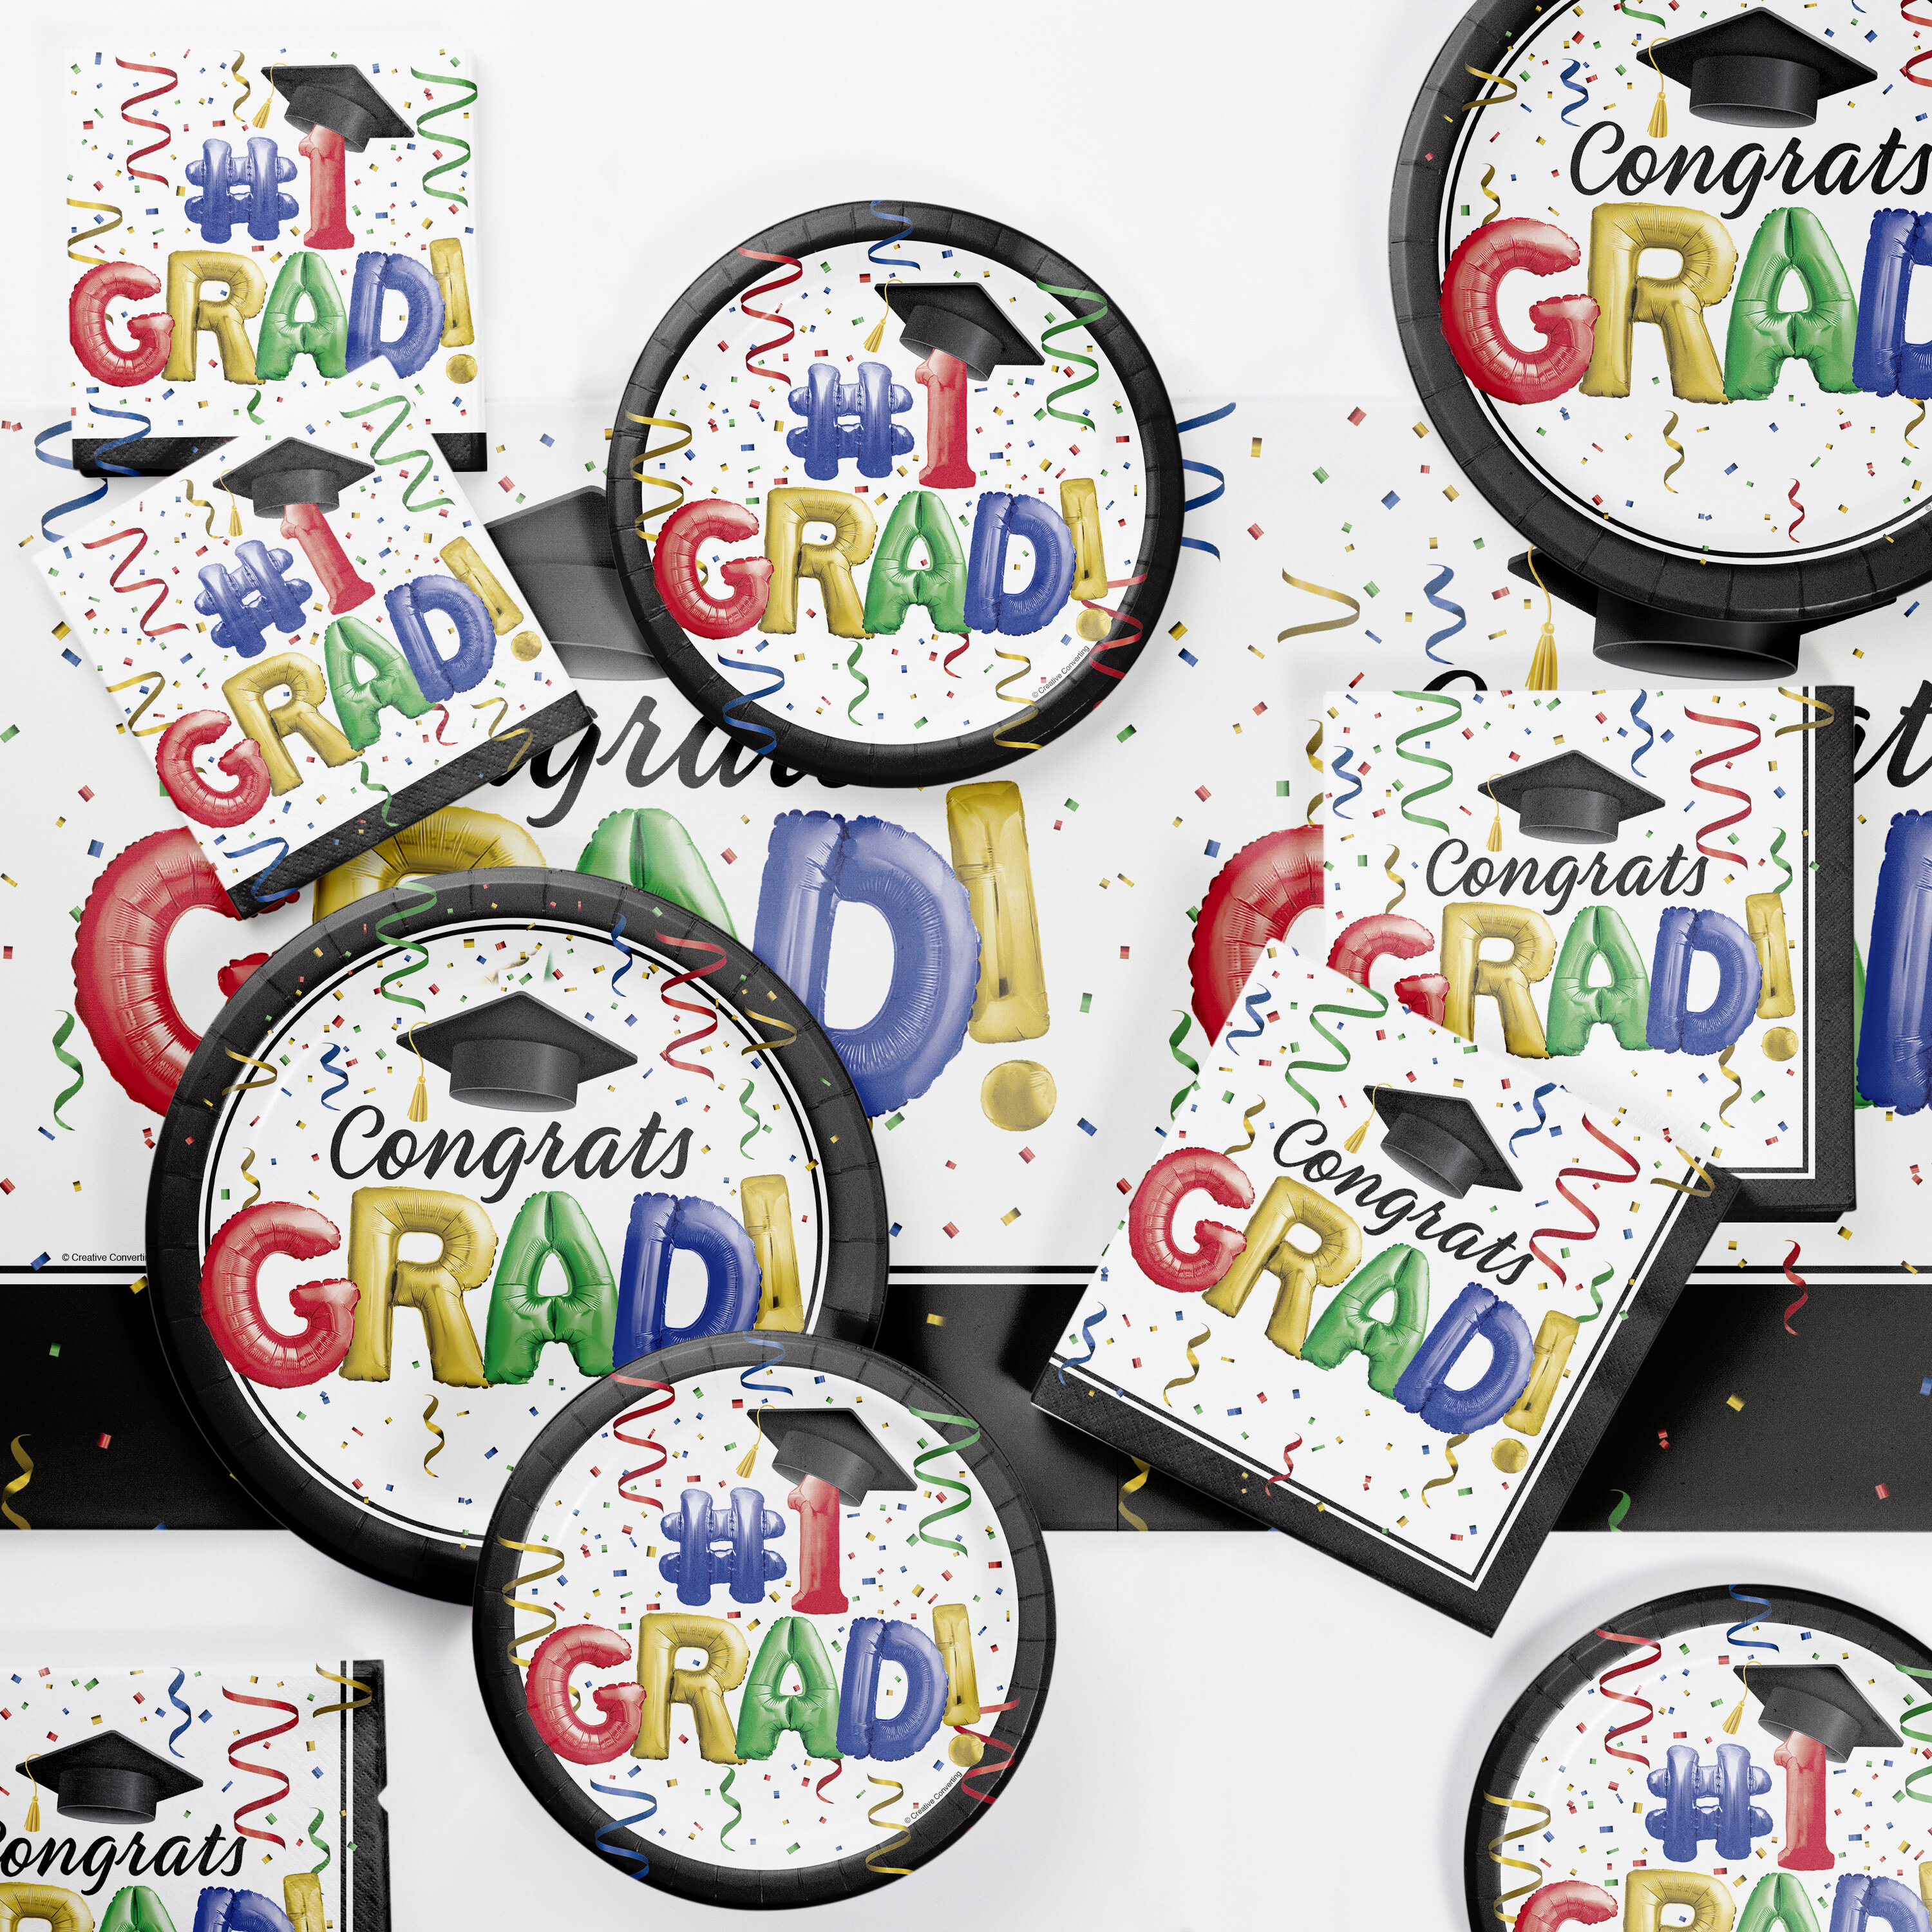 Serve 30 Graduation Party Supplies Congrats Grad Plates and Napkins Graduation Disposable Dinnerware Set with Congrats Grad Banner Balloons for Graduation Party